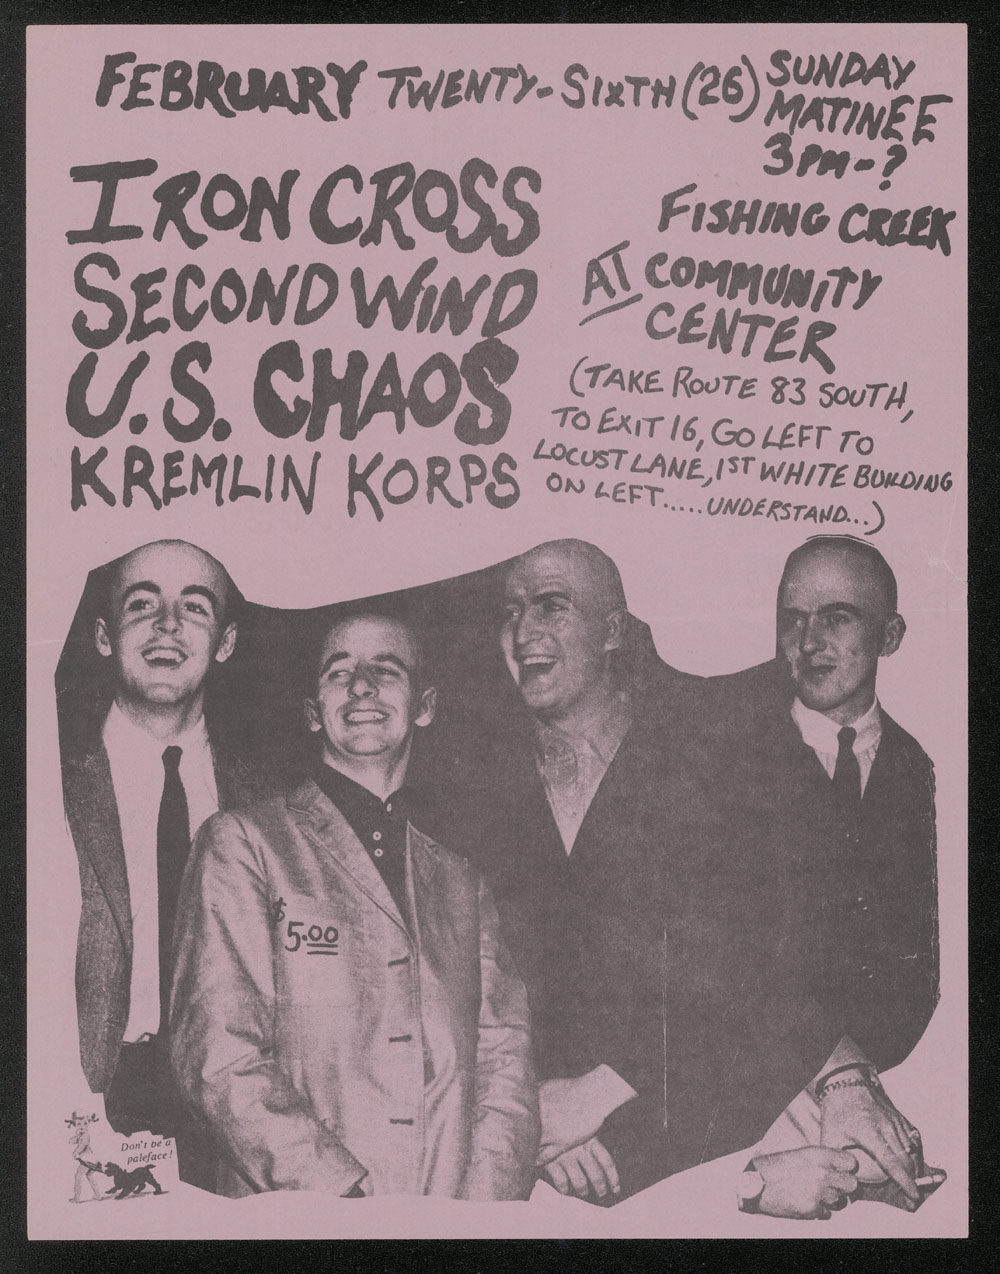 IRON CROSS w/ Second Wind, US Chaos, Kremlin Korps at Fishing Creek Community Center